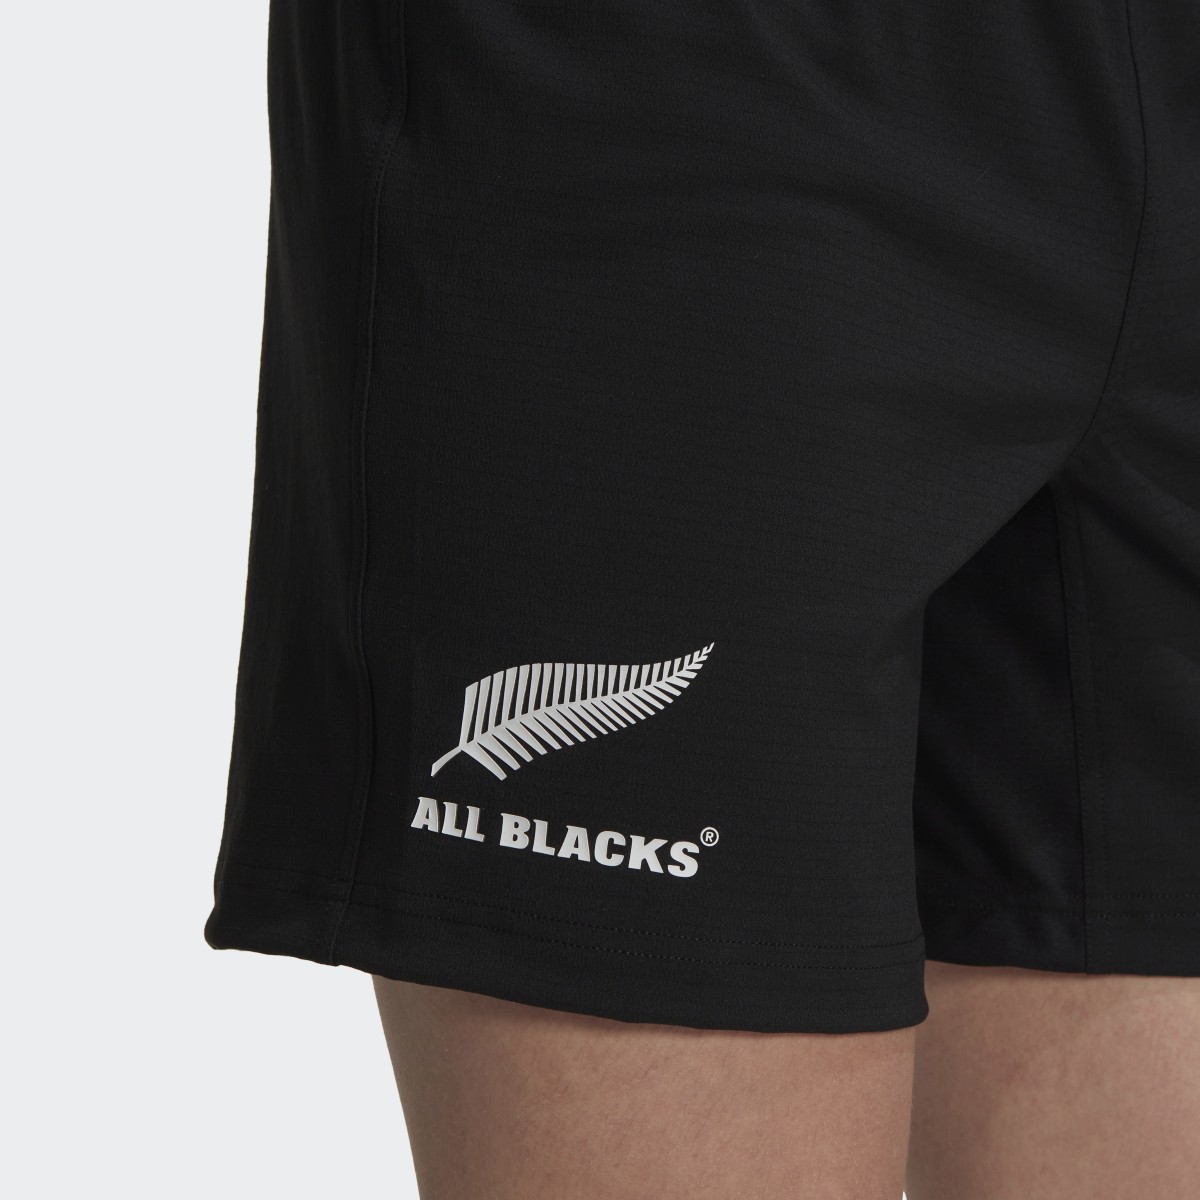 Adidas All Blacks Rugby Home Shorts. 6